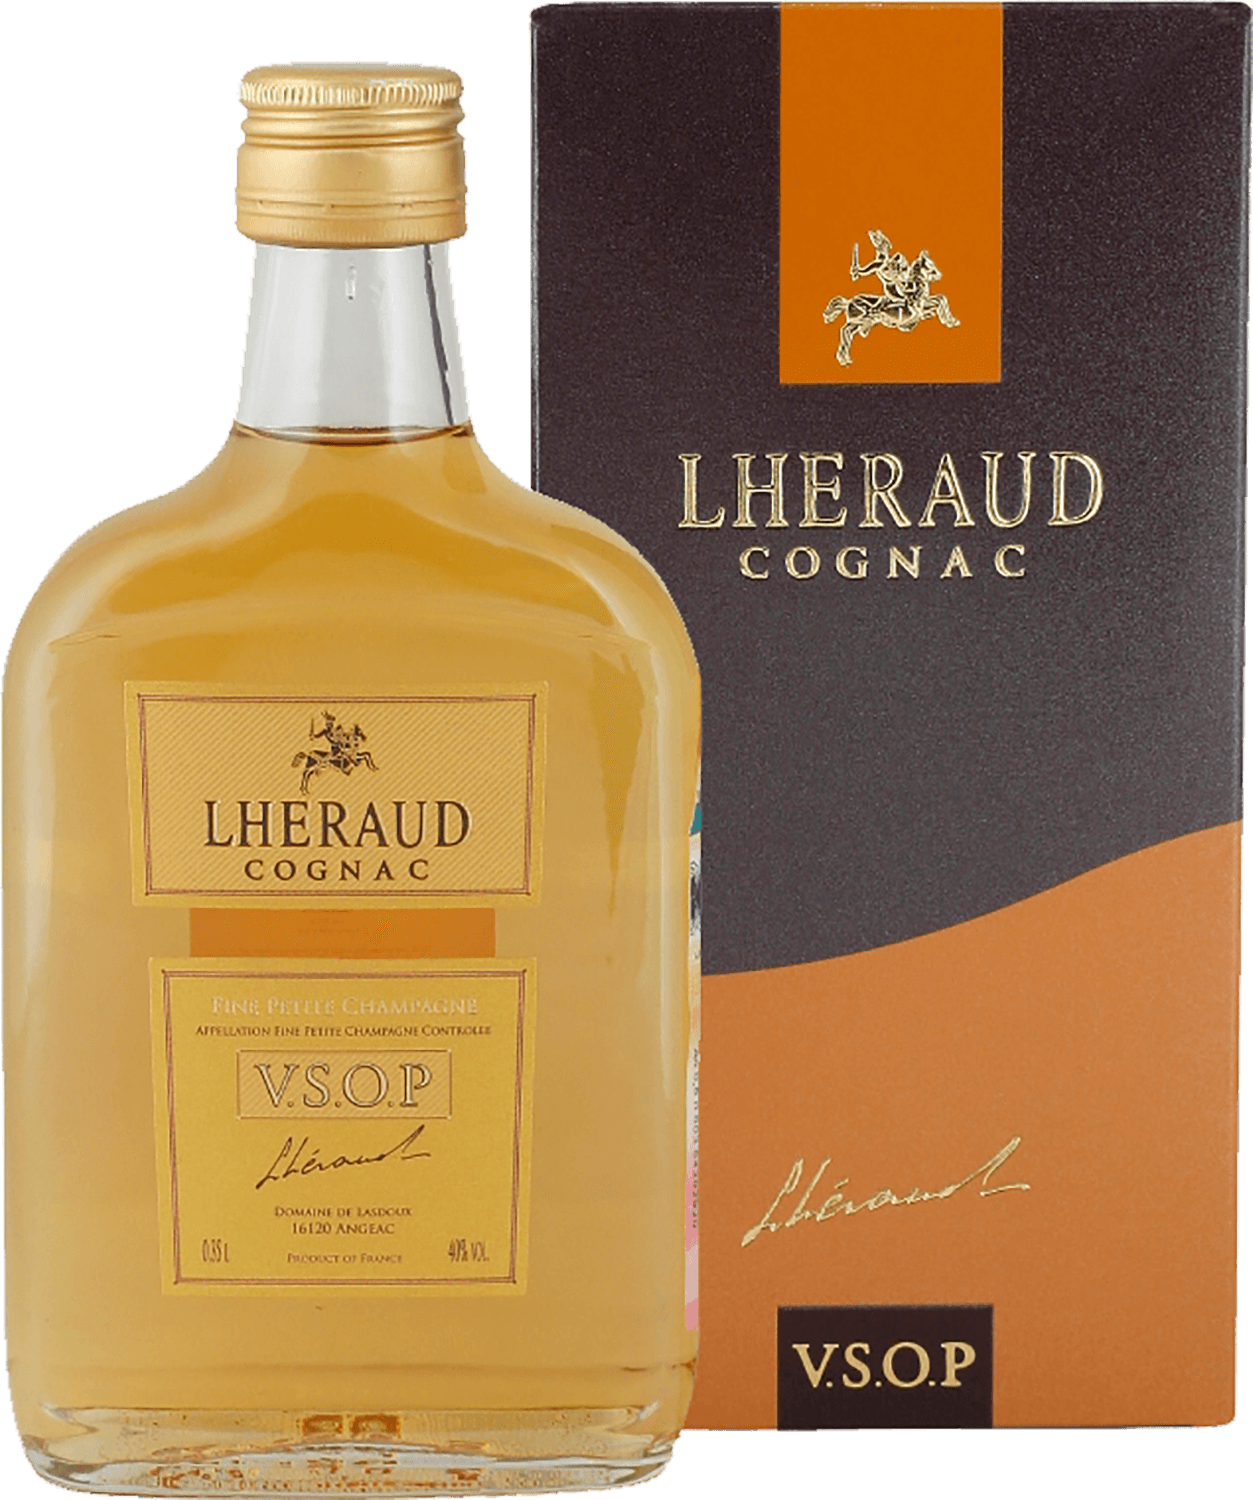 Lheraud Cognac VSOP (gift box) roullet cognac vsop gift box